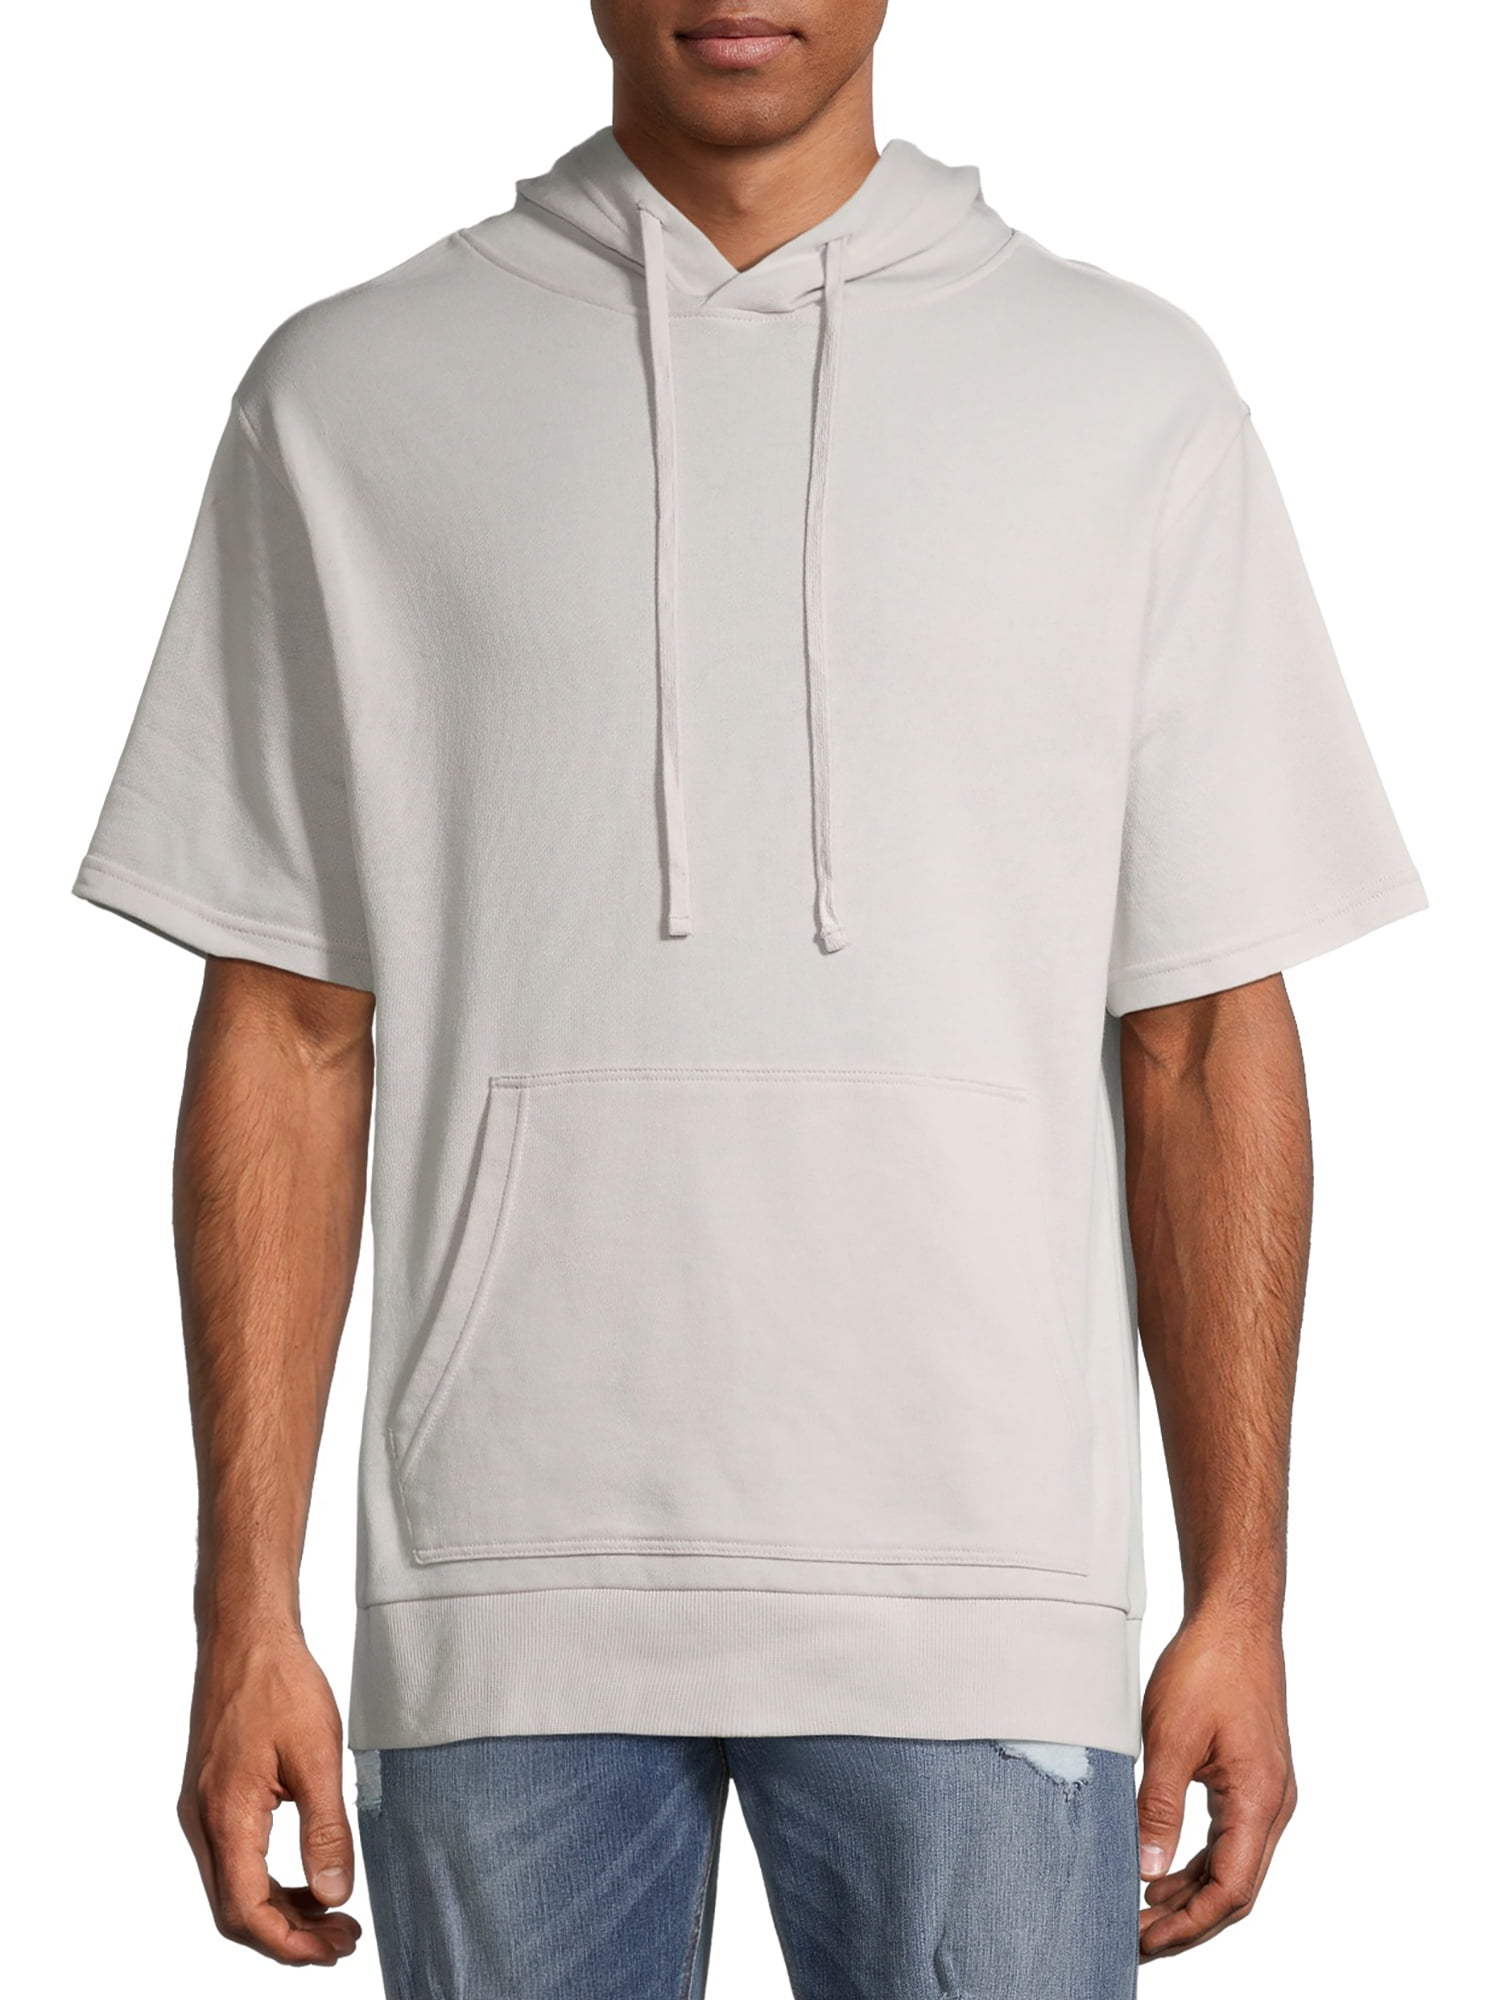 Hooded Sweatshirt Space Men_s Premium T-Shirt Sport Grey The Place Between Your Ears